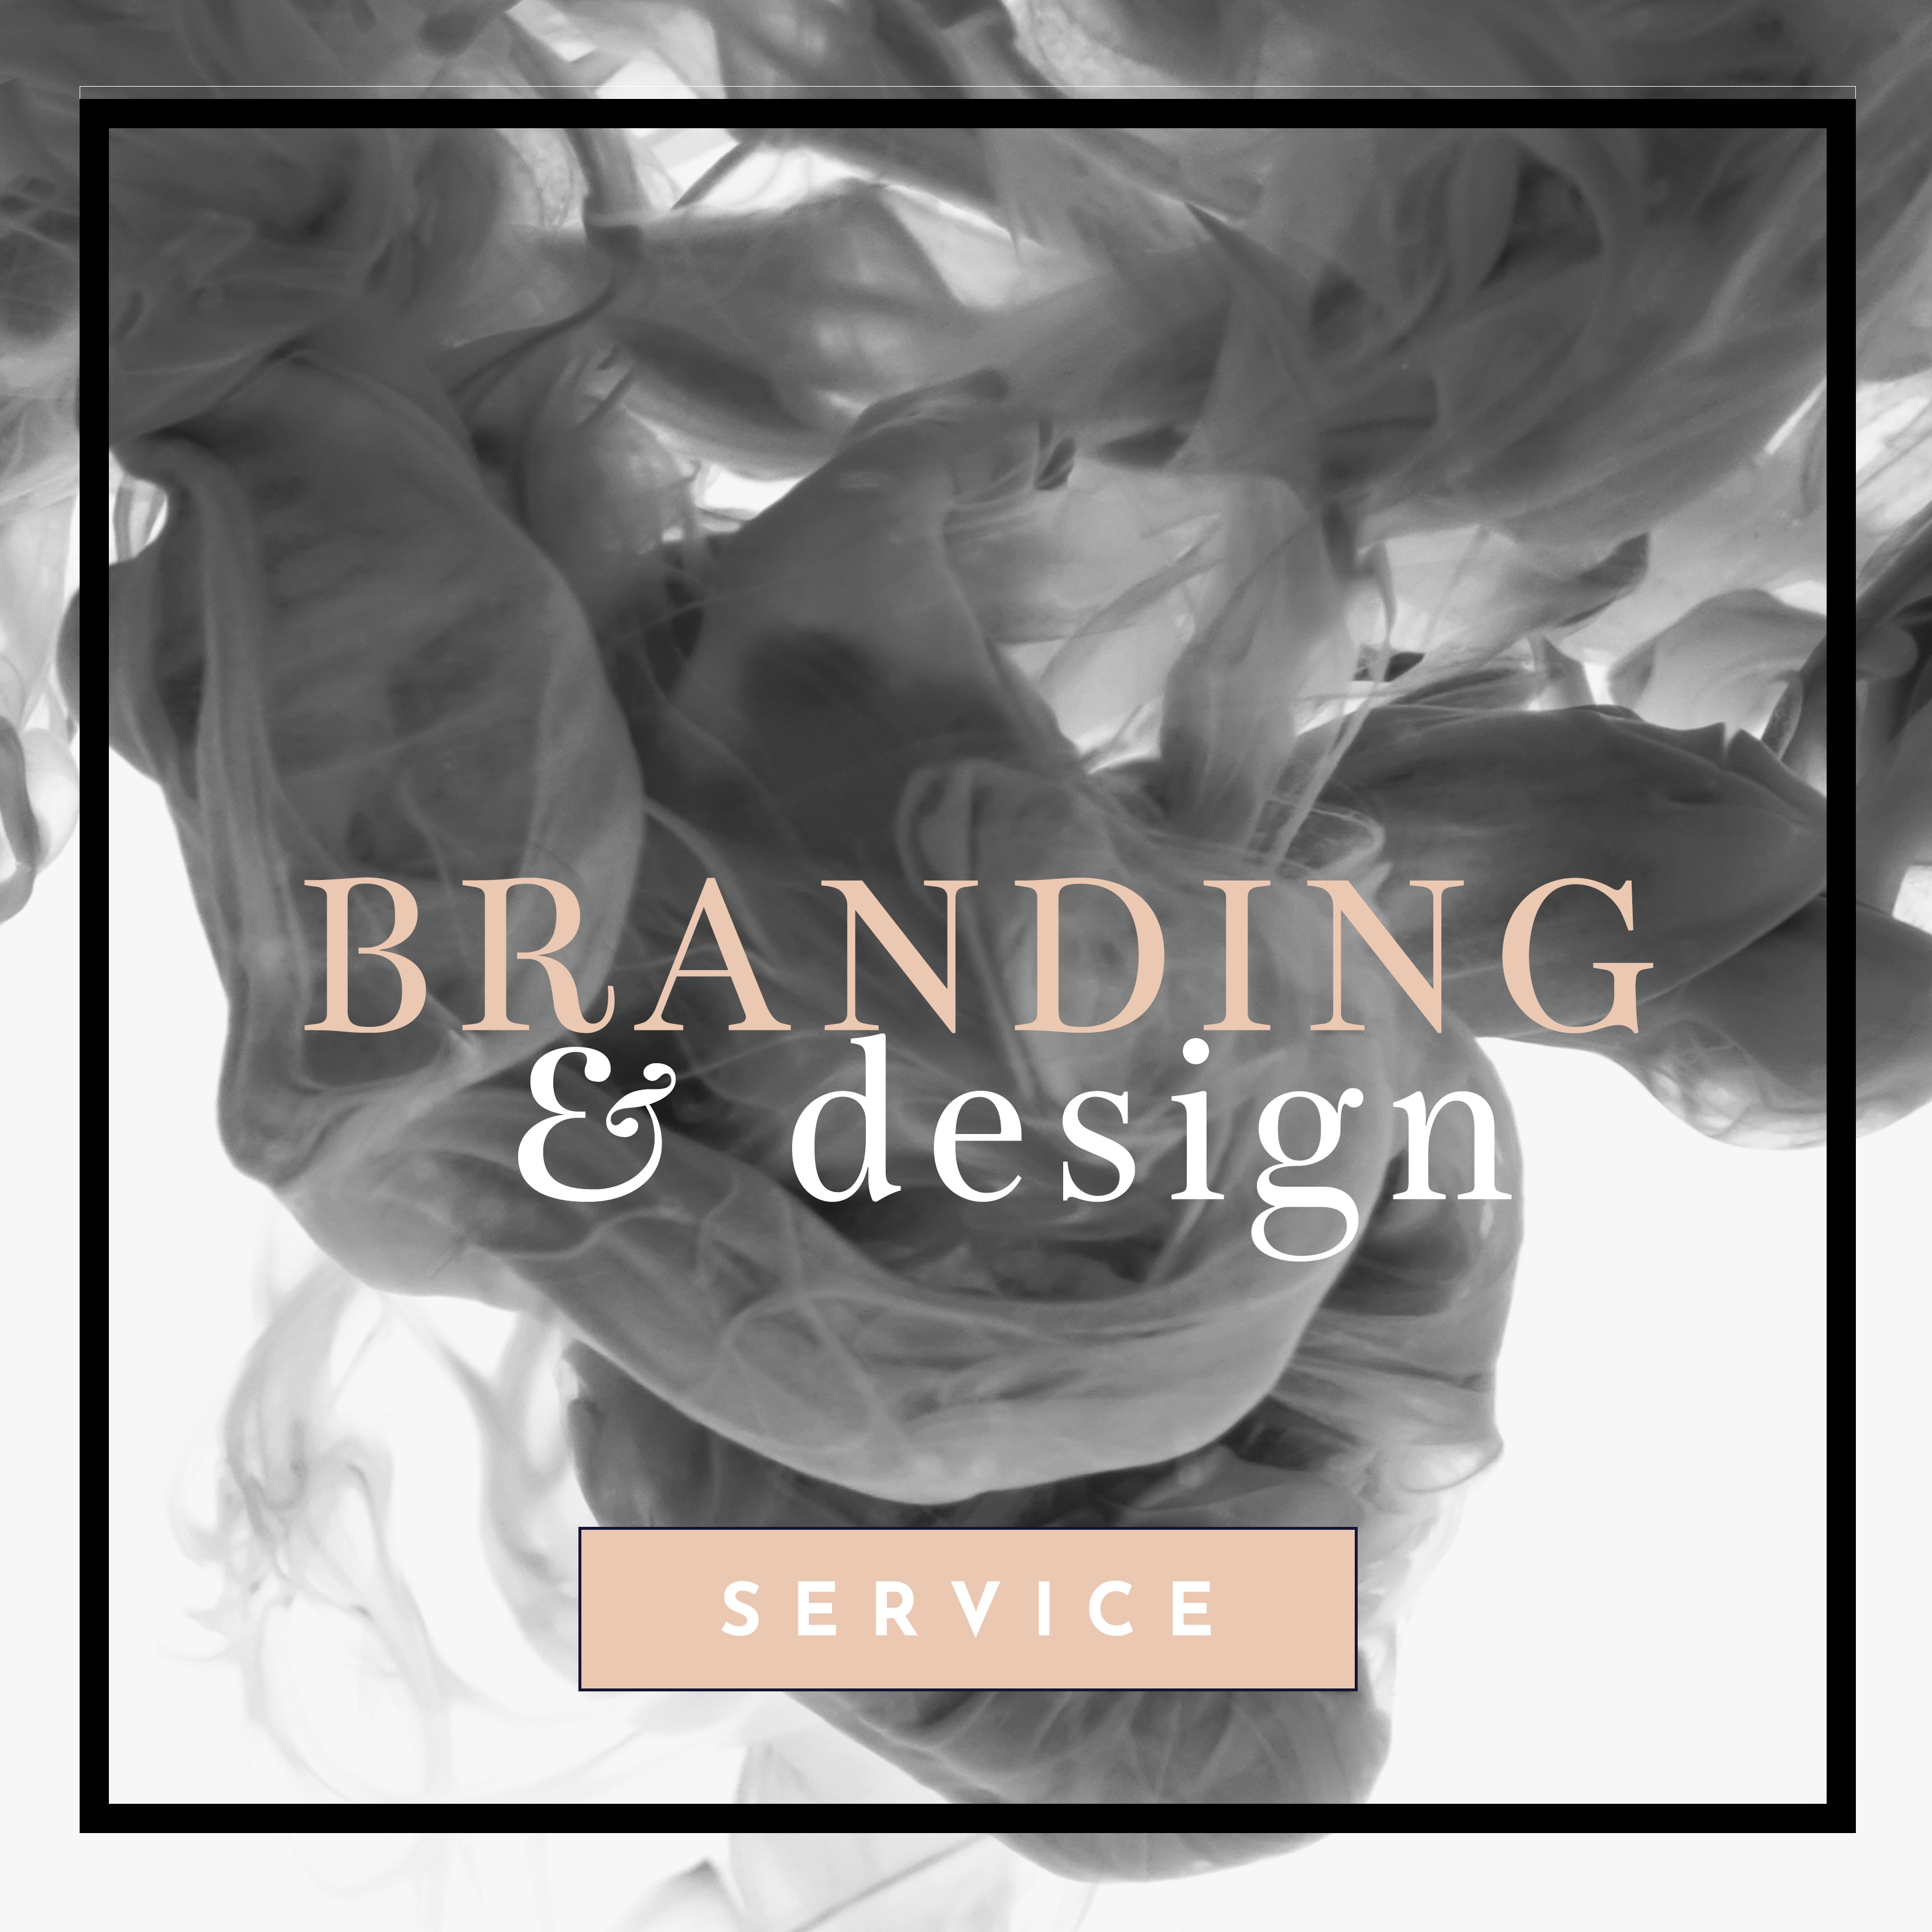 Branding and design